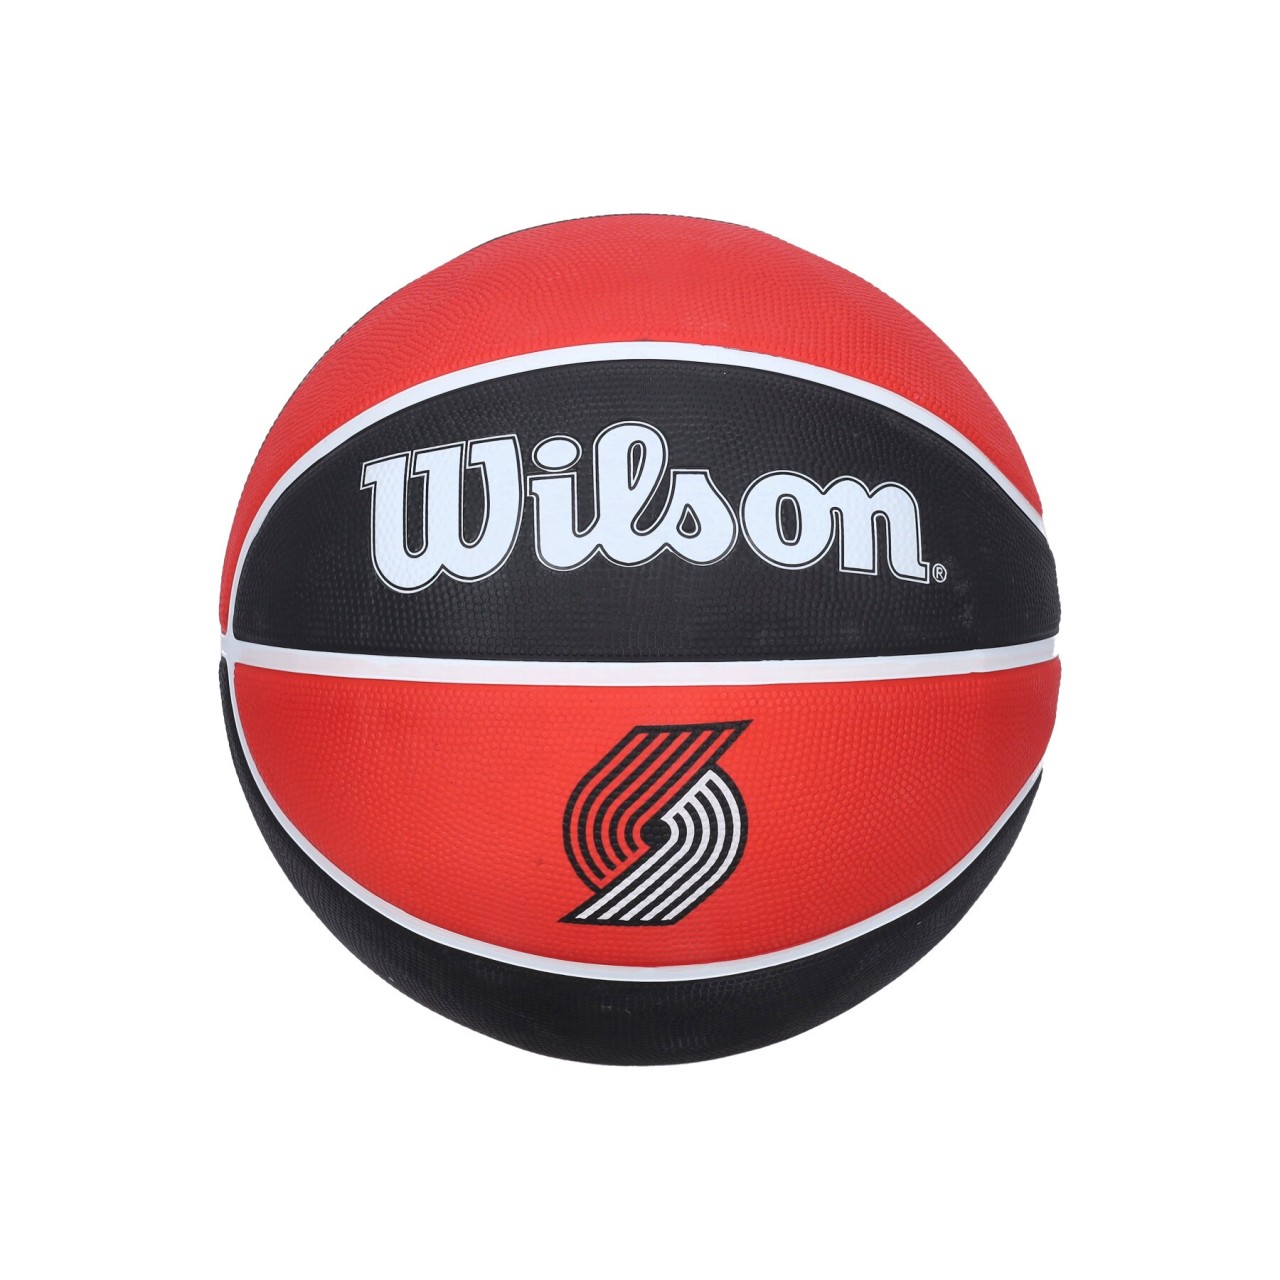 WILSON TEAM NBA TEAM TRIBUTE BASKETBALL SIZE 7 PORBLA WTB1300XBPOR